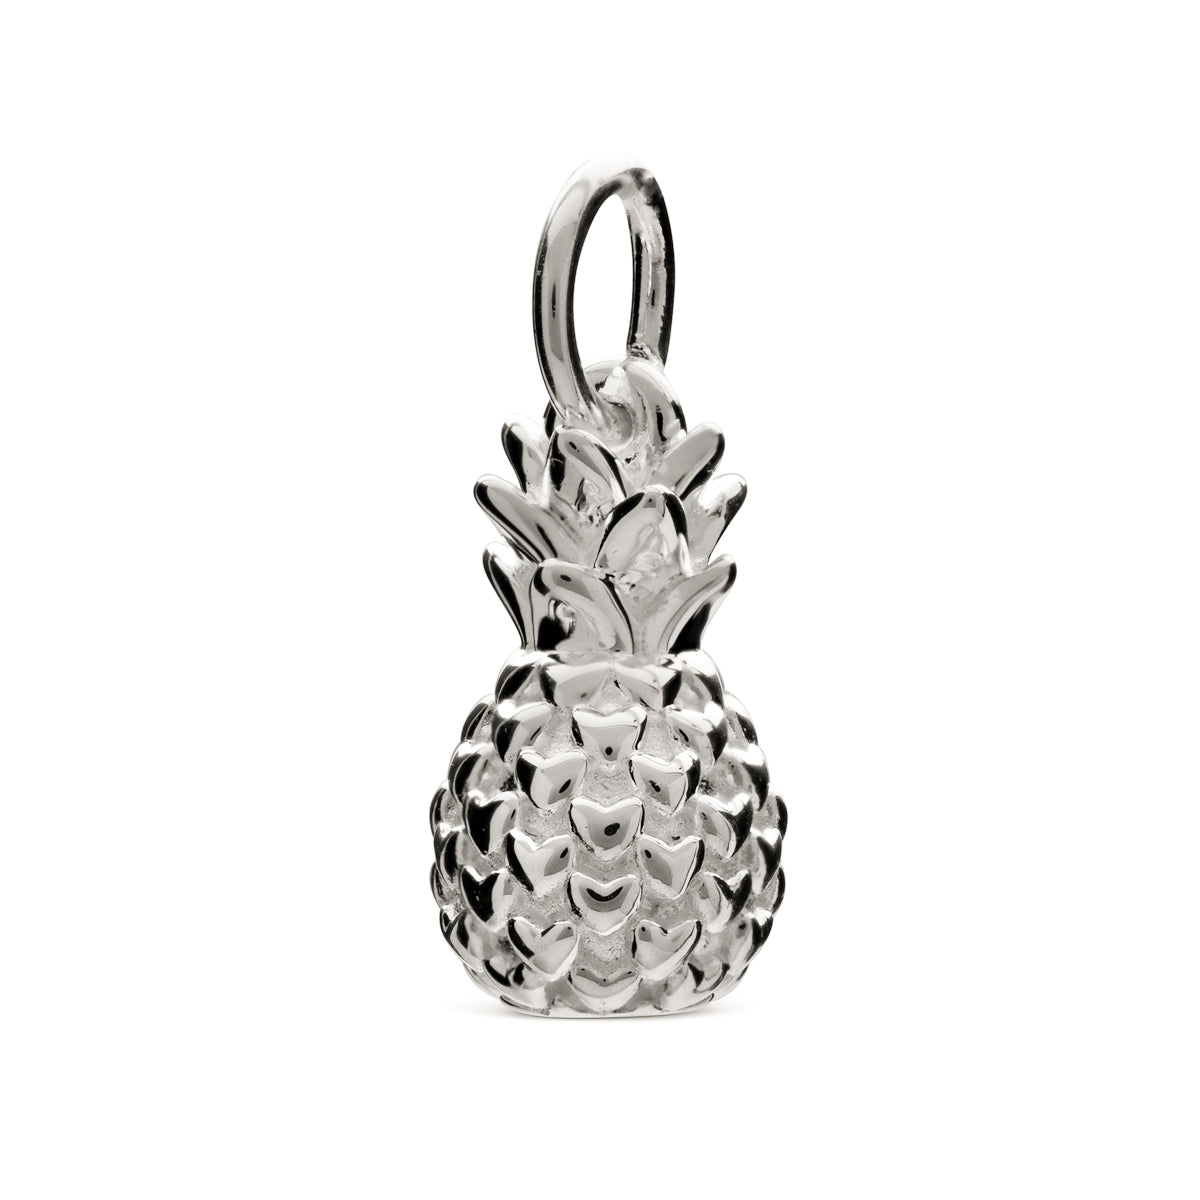 Pineapple Silver Charm Pendant Fits Pandora Style Bracelets Scarlett Jewellery